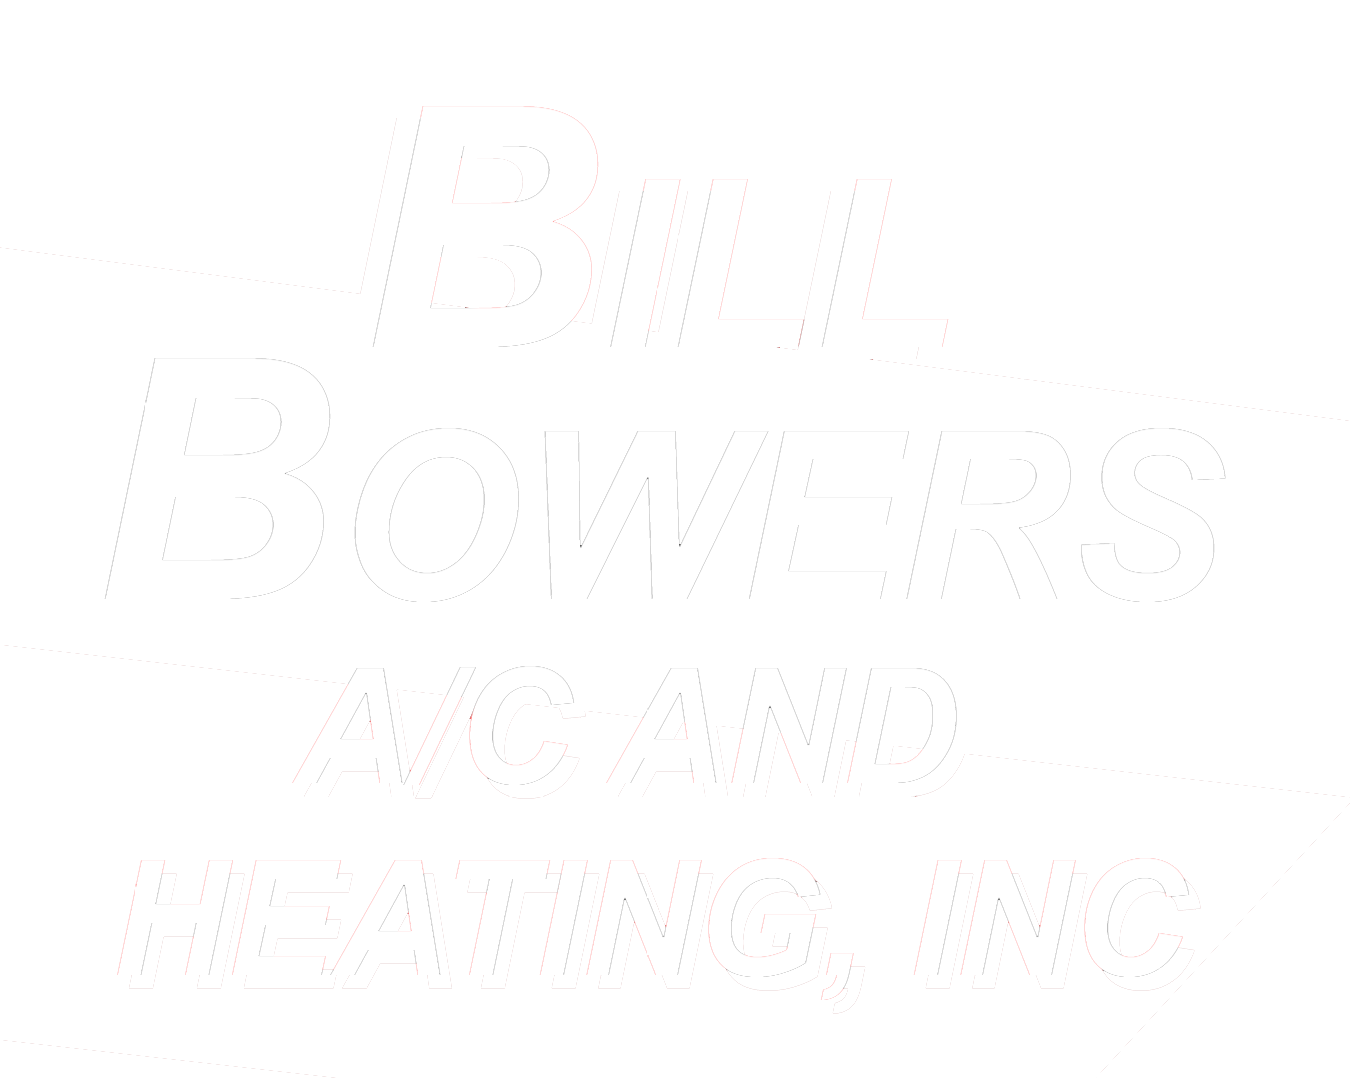 Bill Bowers AC